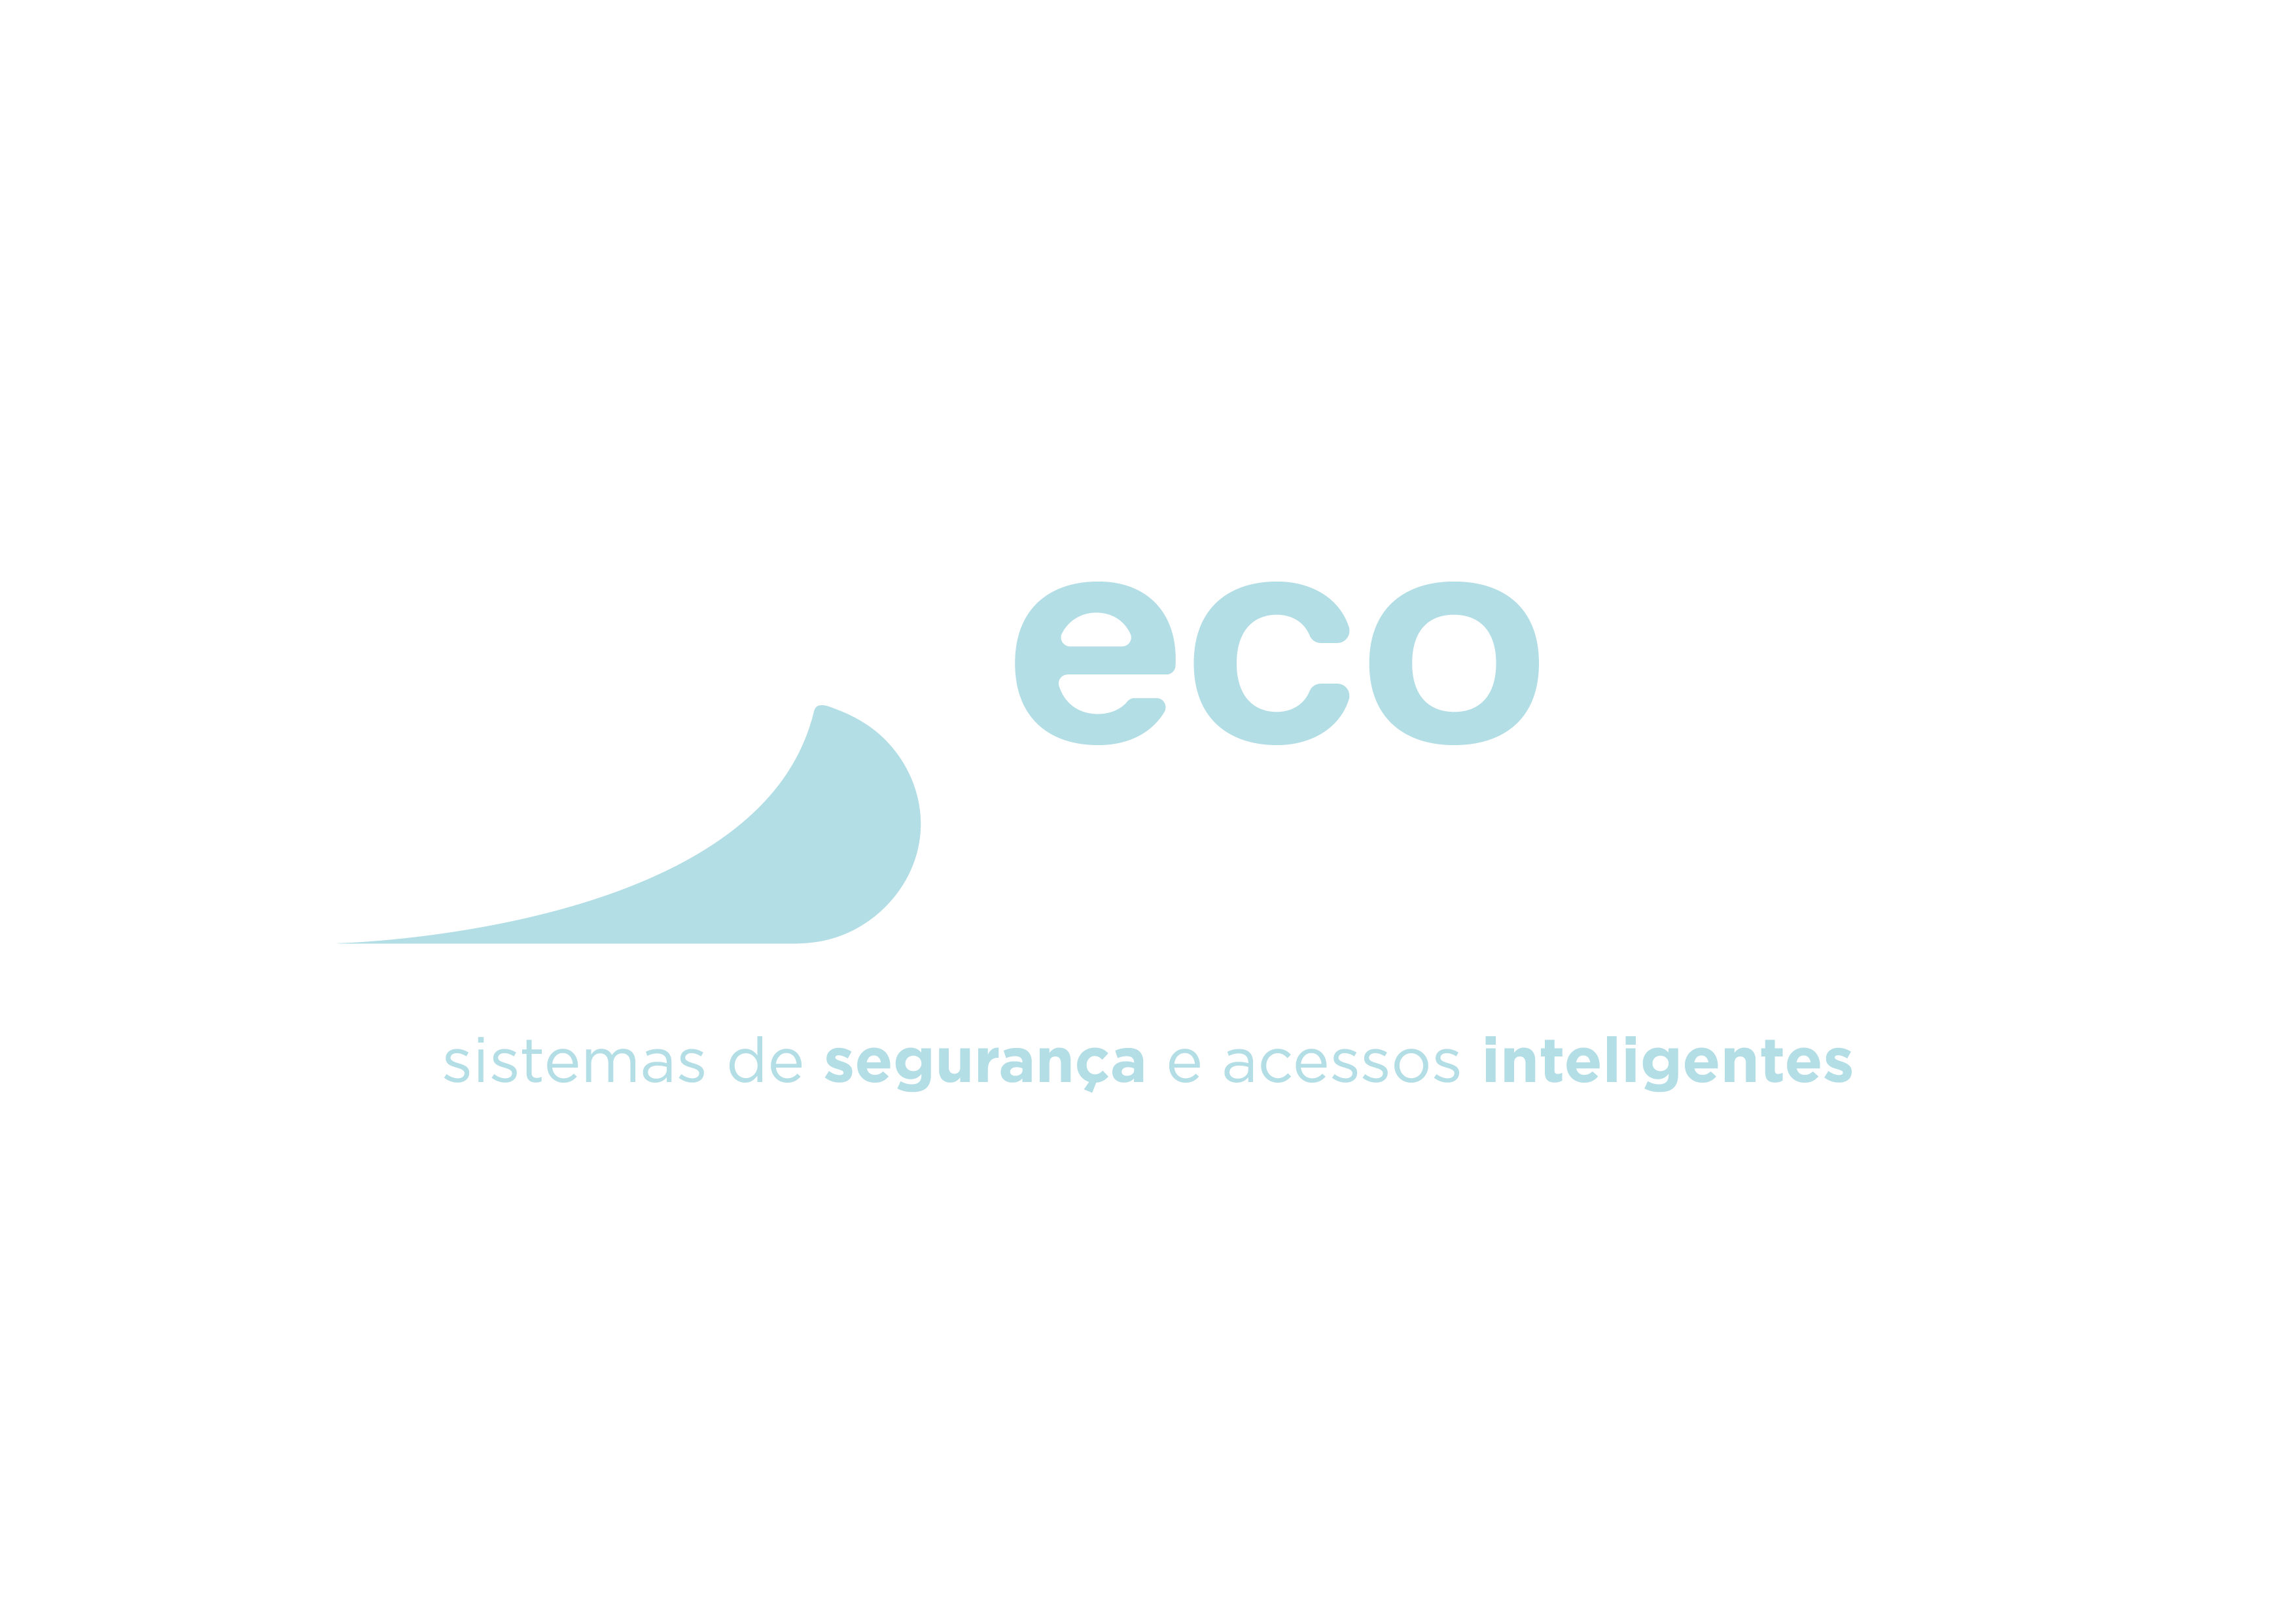 ecocontrol full logo